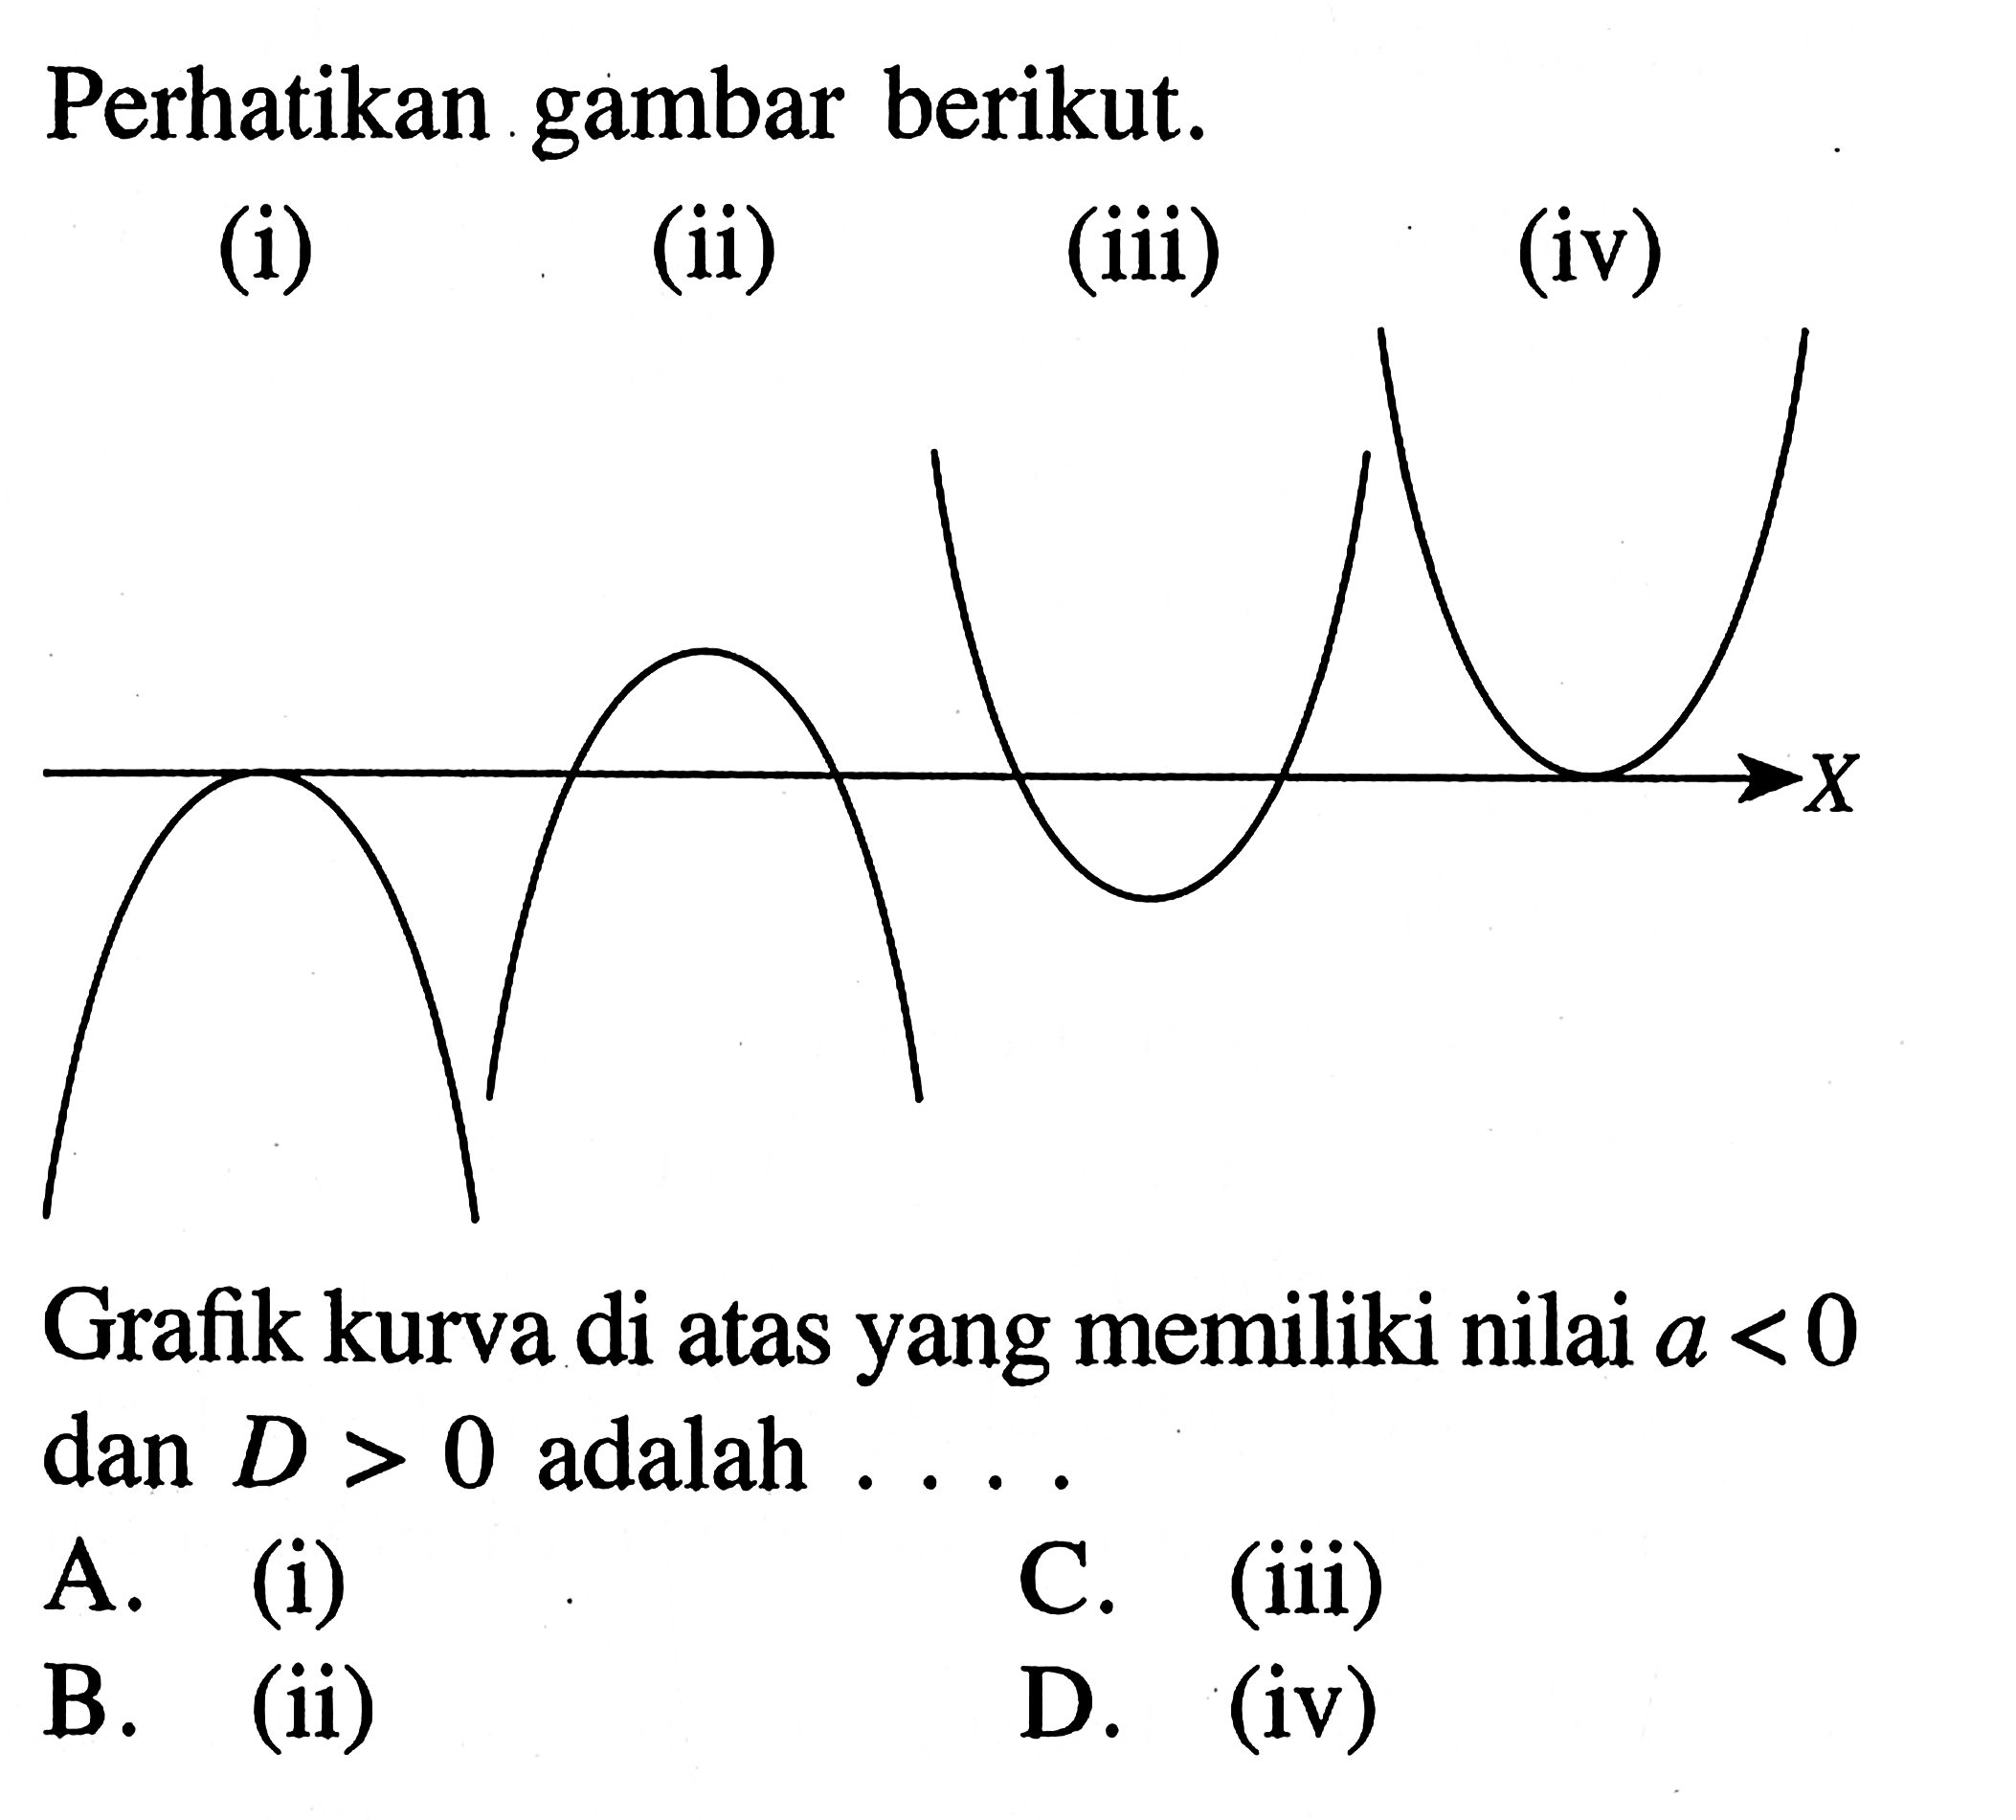 Perhatikan. gambar berikut. (i) (ii) (iii) (iv) Grafik kurva di atas yang memiliki nilai a < 0 dan D > 0 adalah . . . .  A. (i) B. (ii) C. (iii) D. (iv)